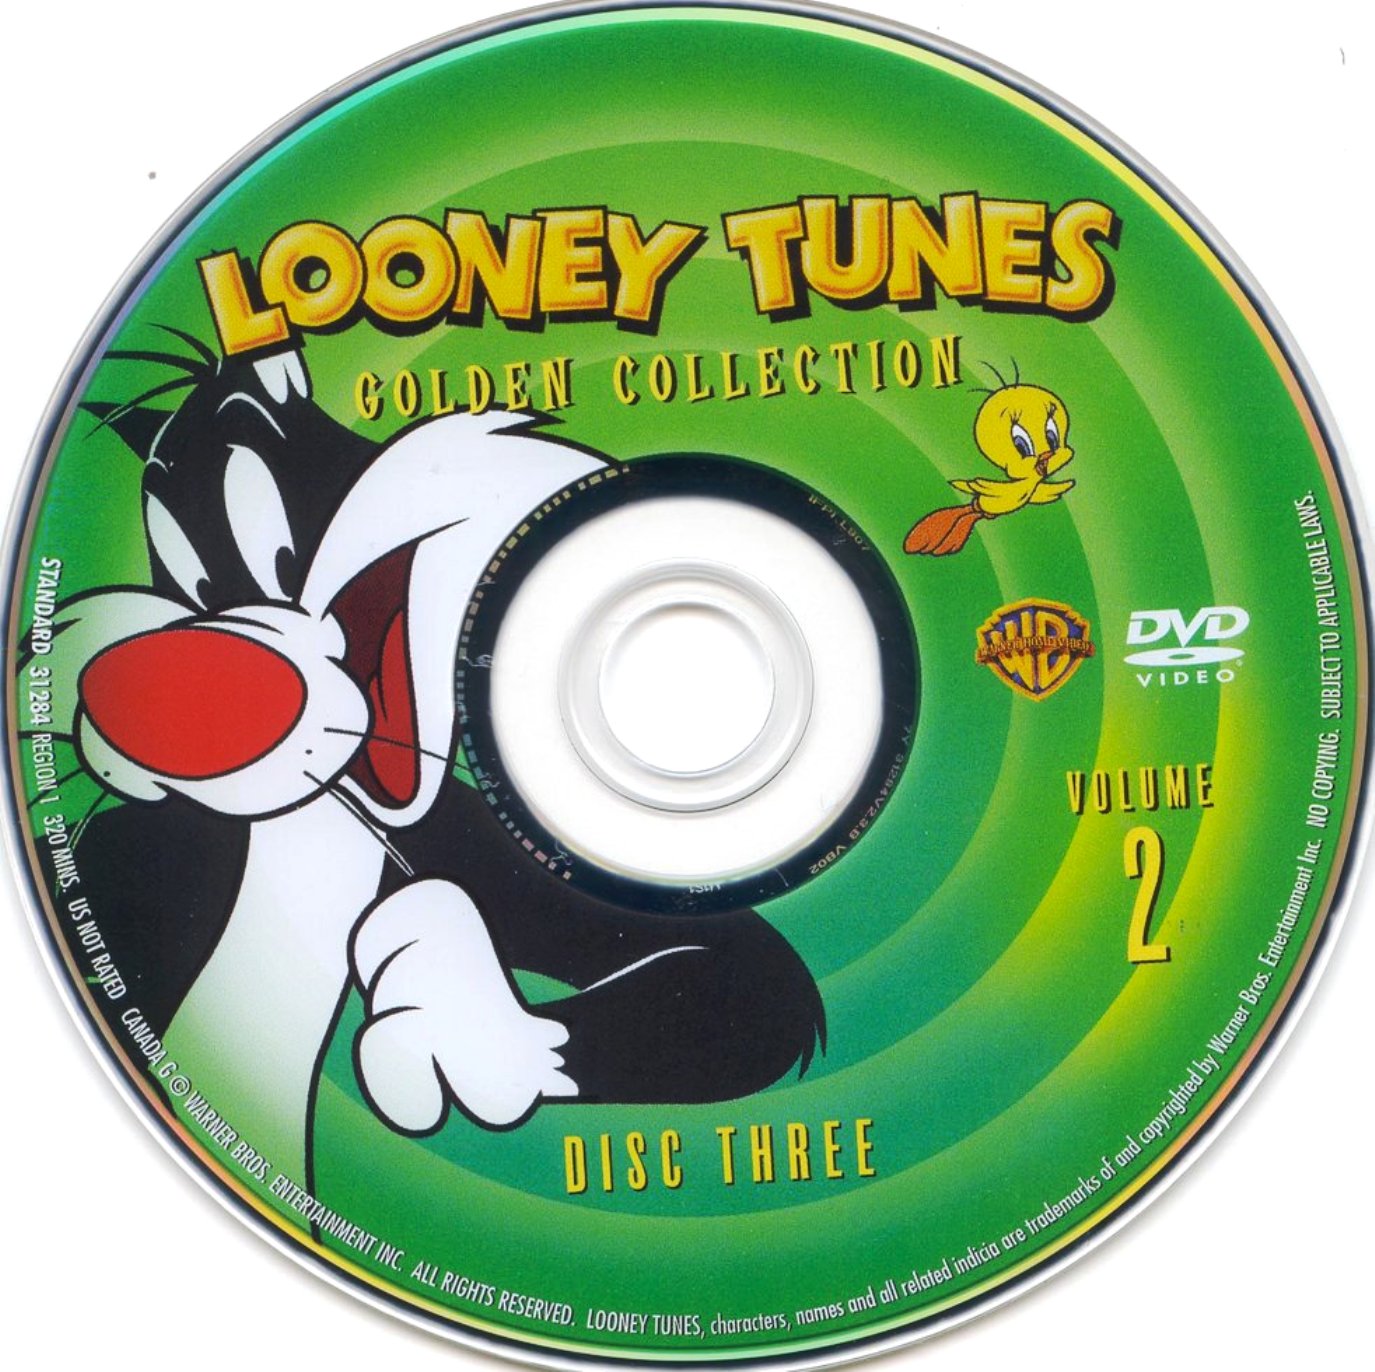 Looney Tunes Golden Collection Volume 7 Dvd